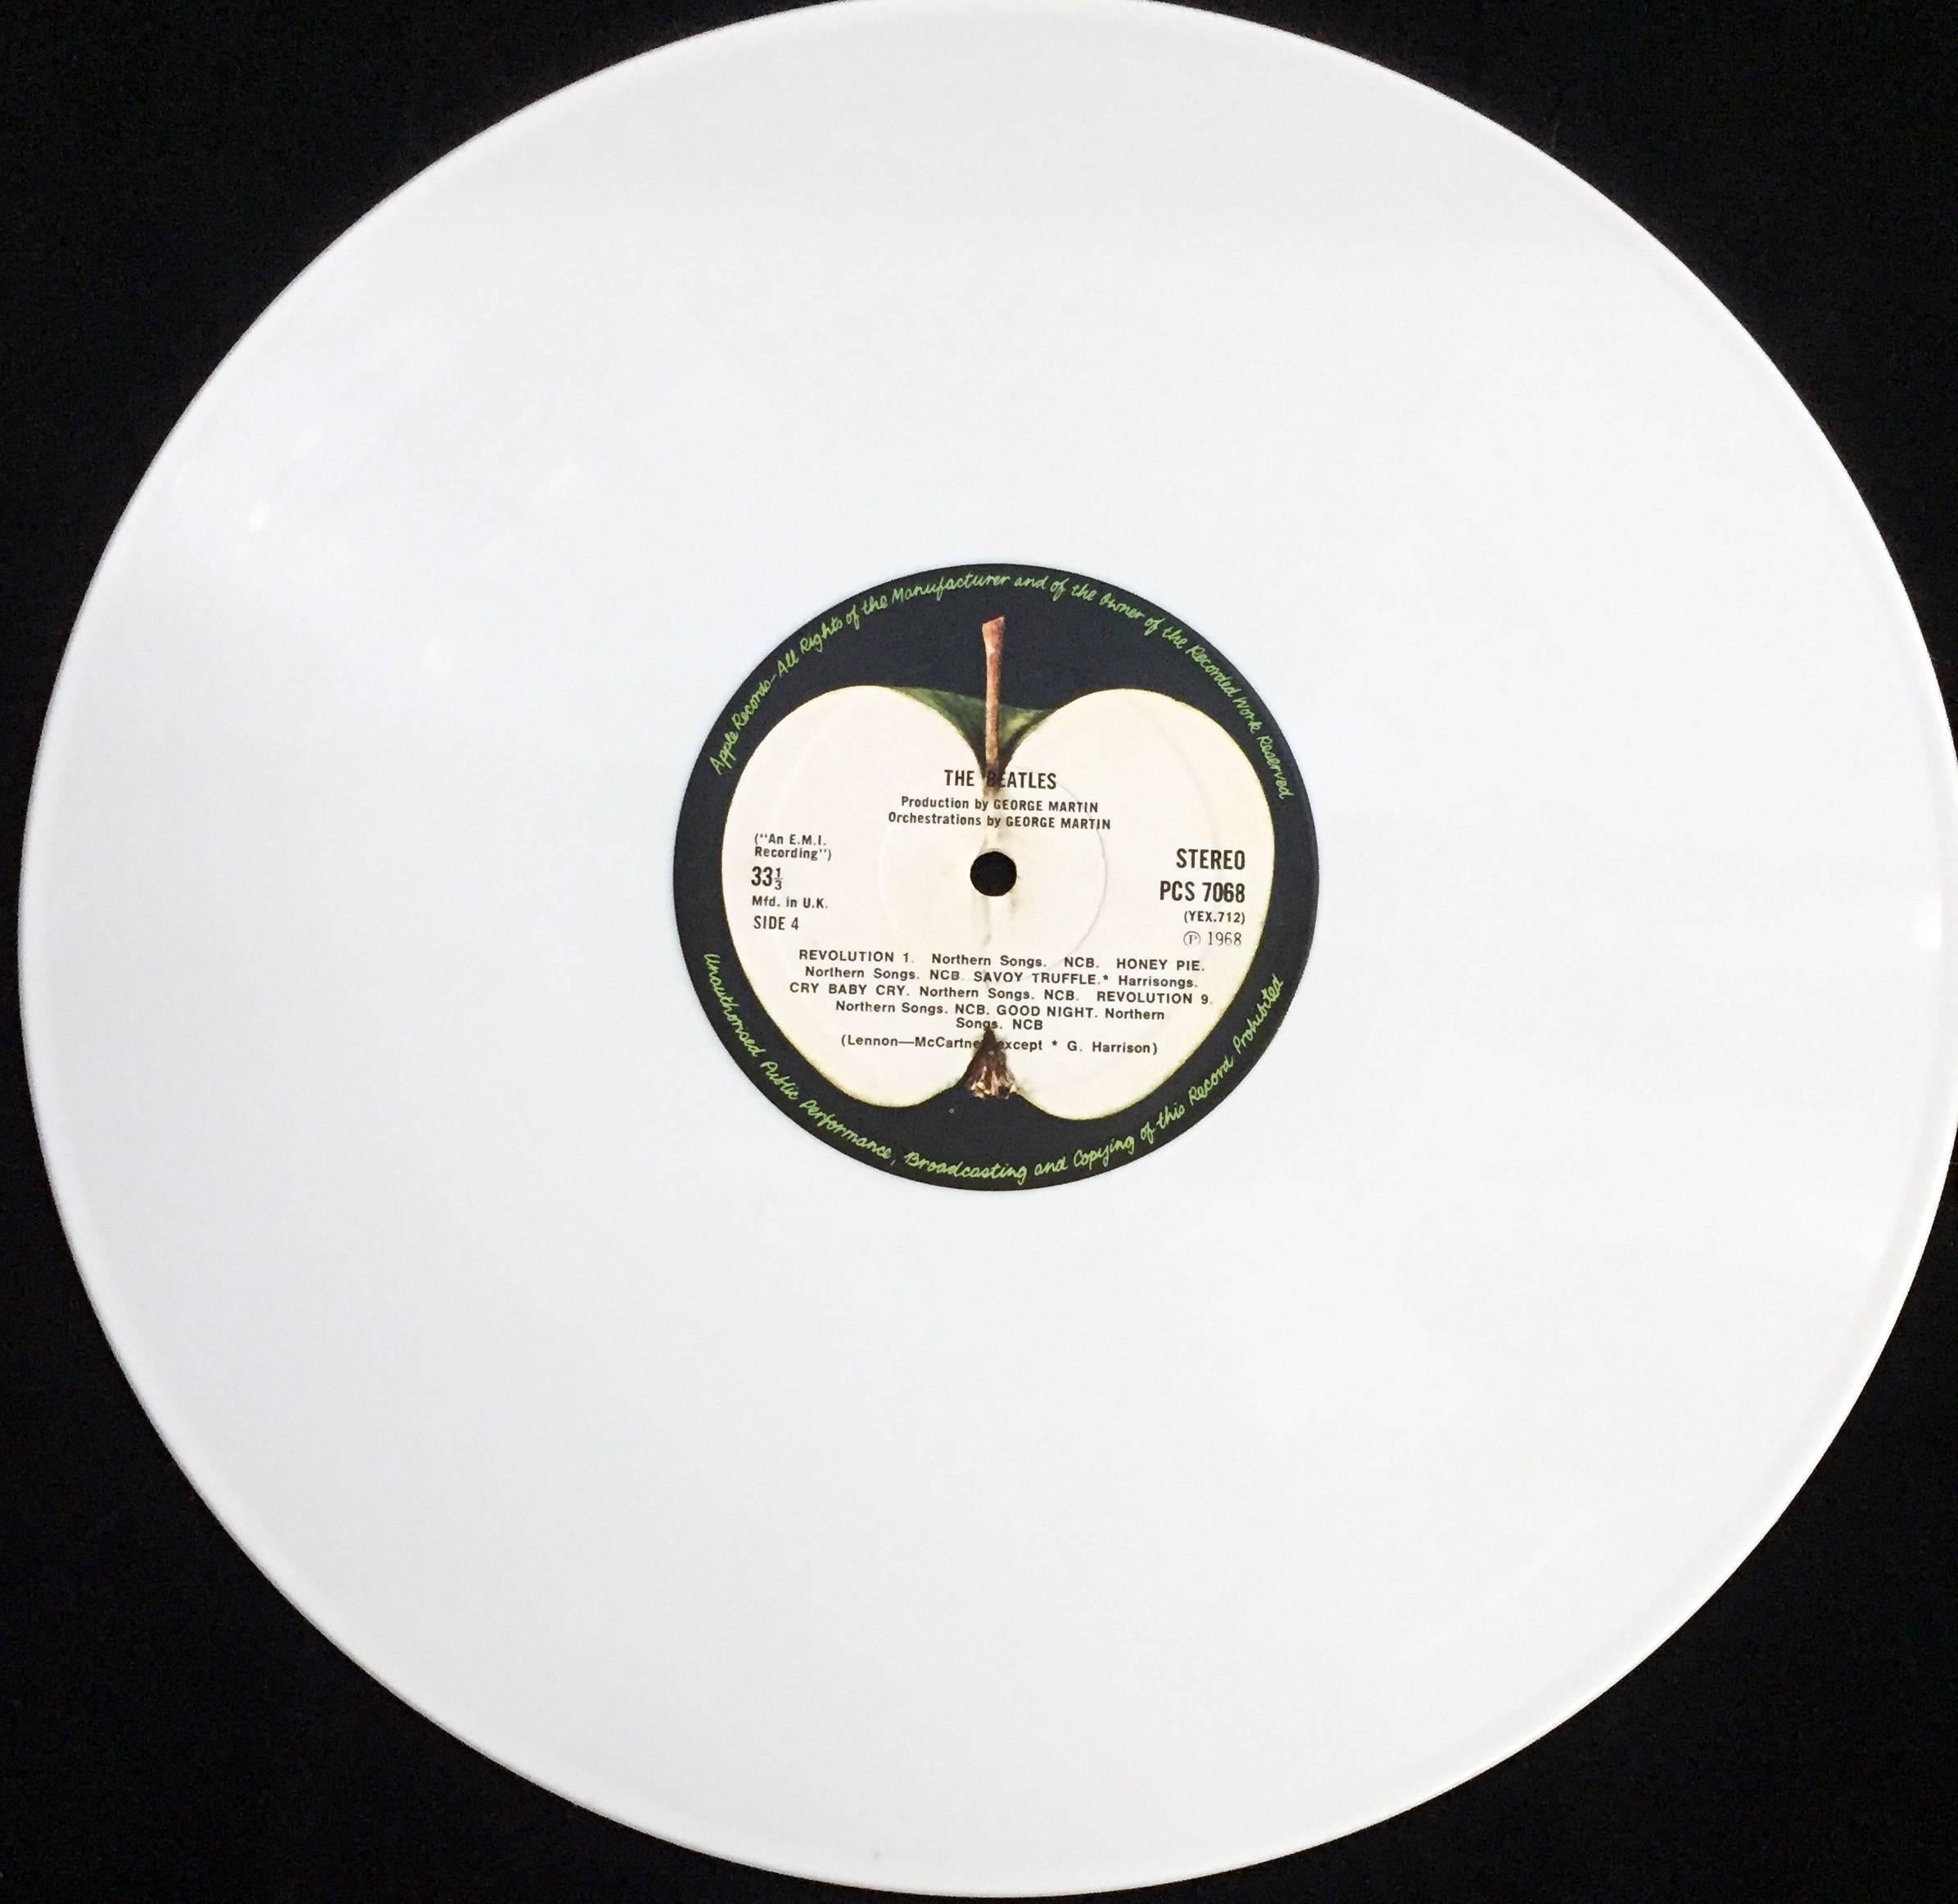 Mid-20th Century Beatles White Album, Rare White Vinyl Pressing